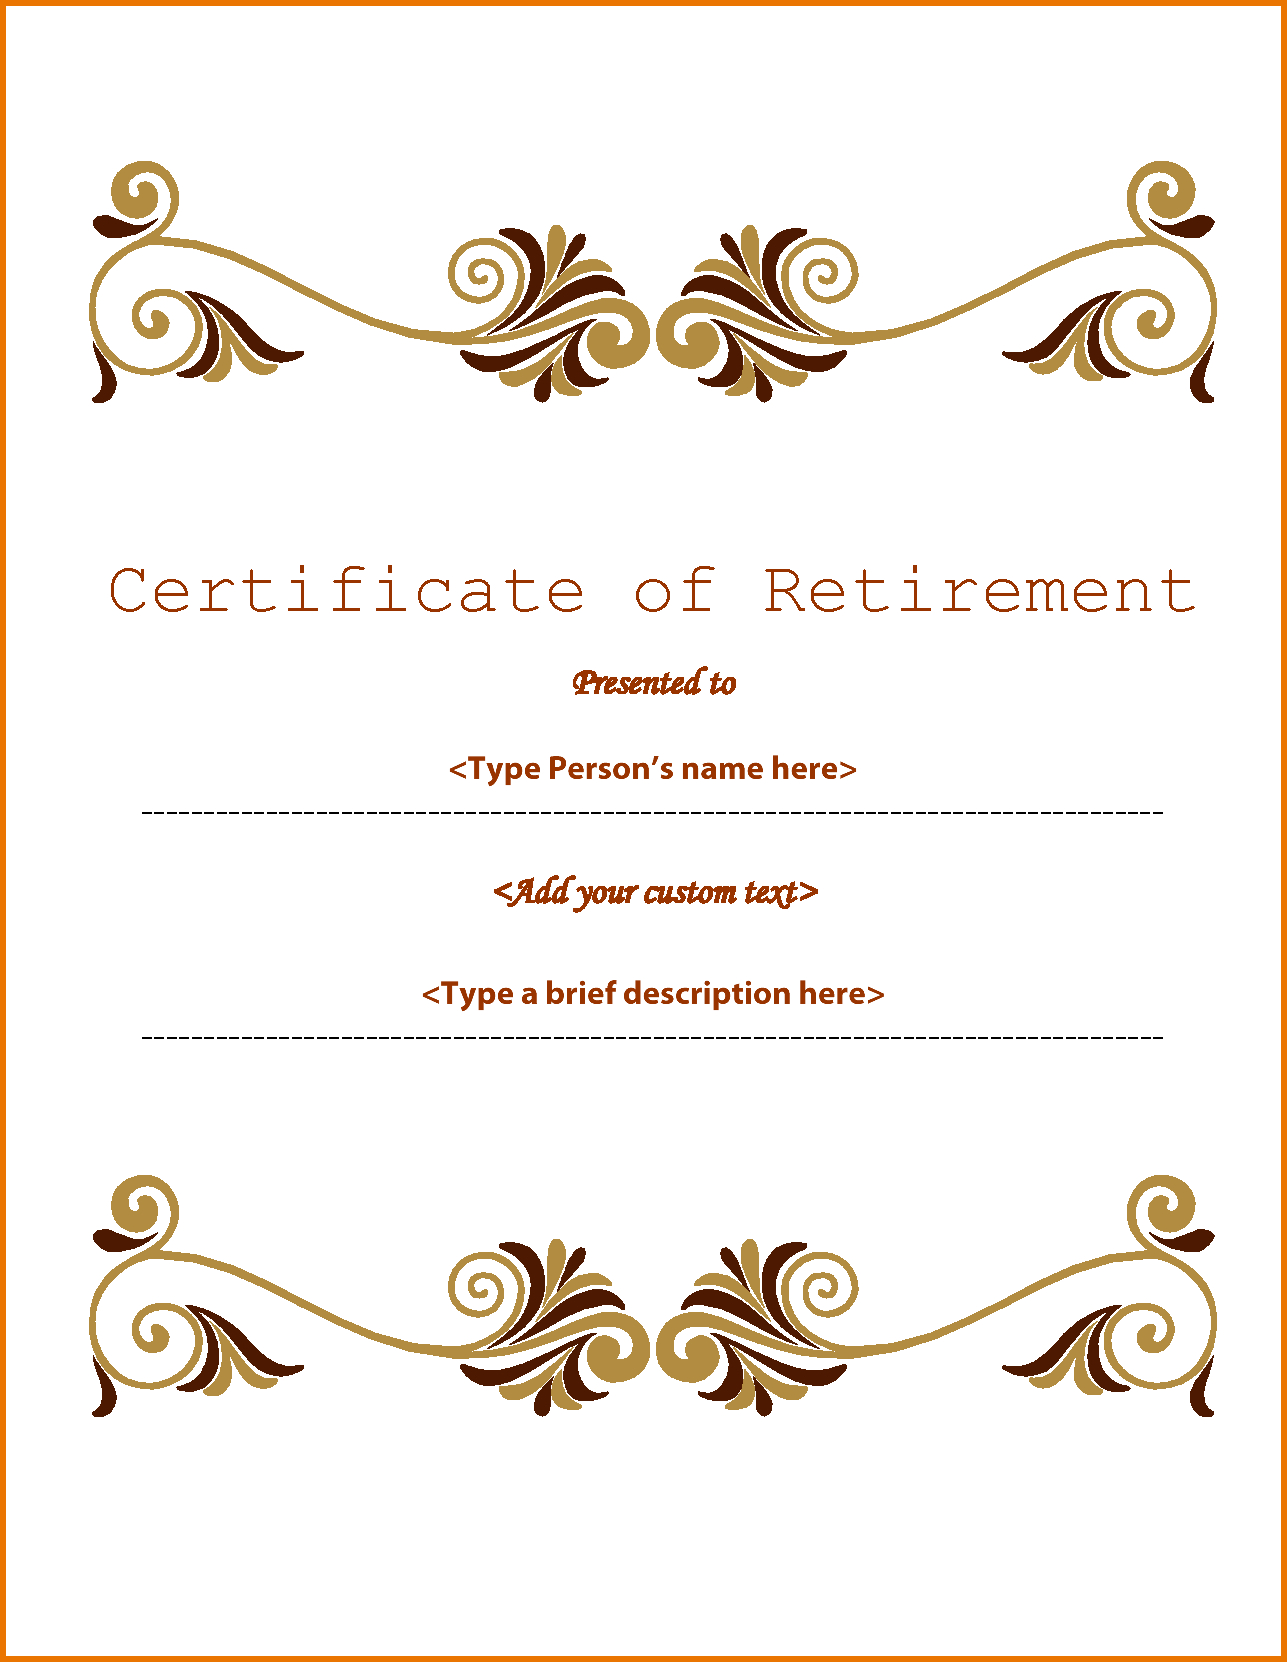 Retirement Certificate Template.65840807 | Scope Of Work For Retirement Certificate Template